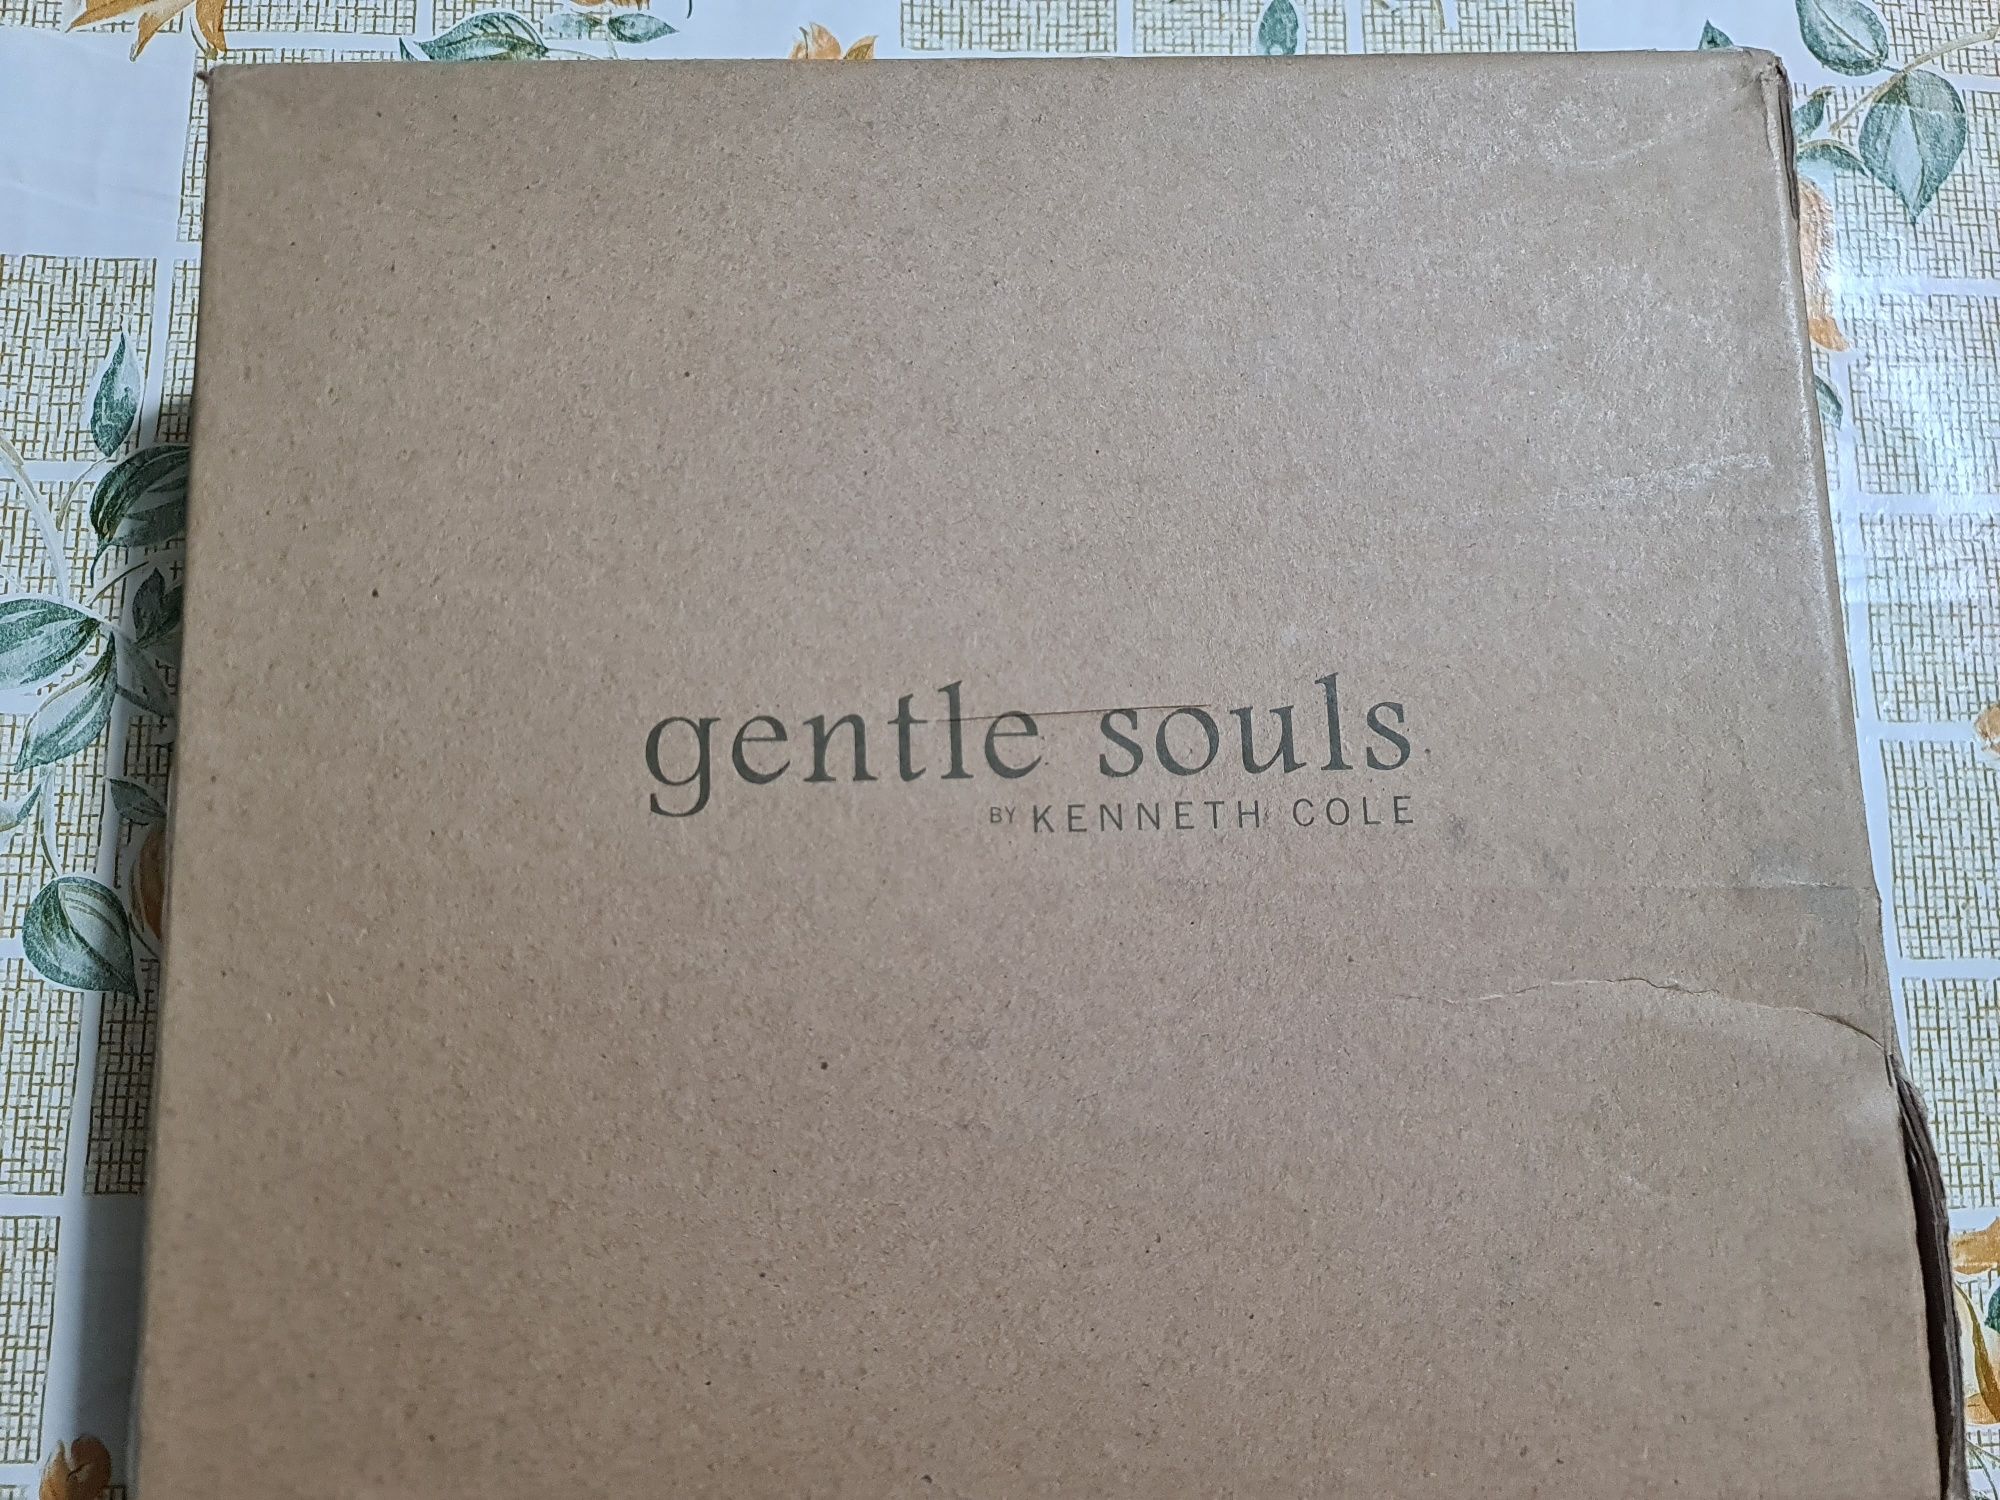 Босоножки Kenneth Cole gentle souls размер 36,22.5см по стельке